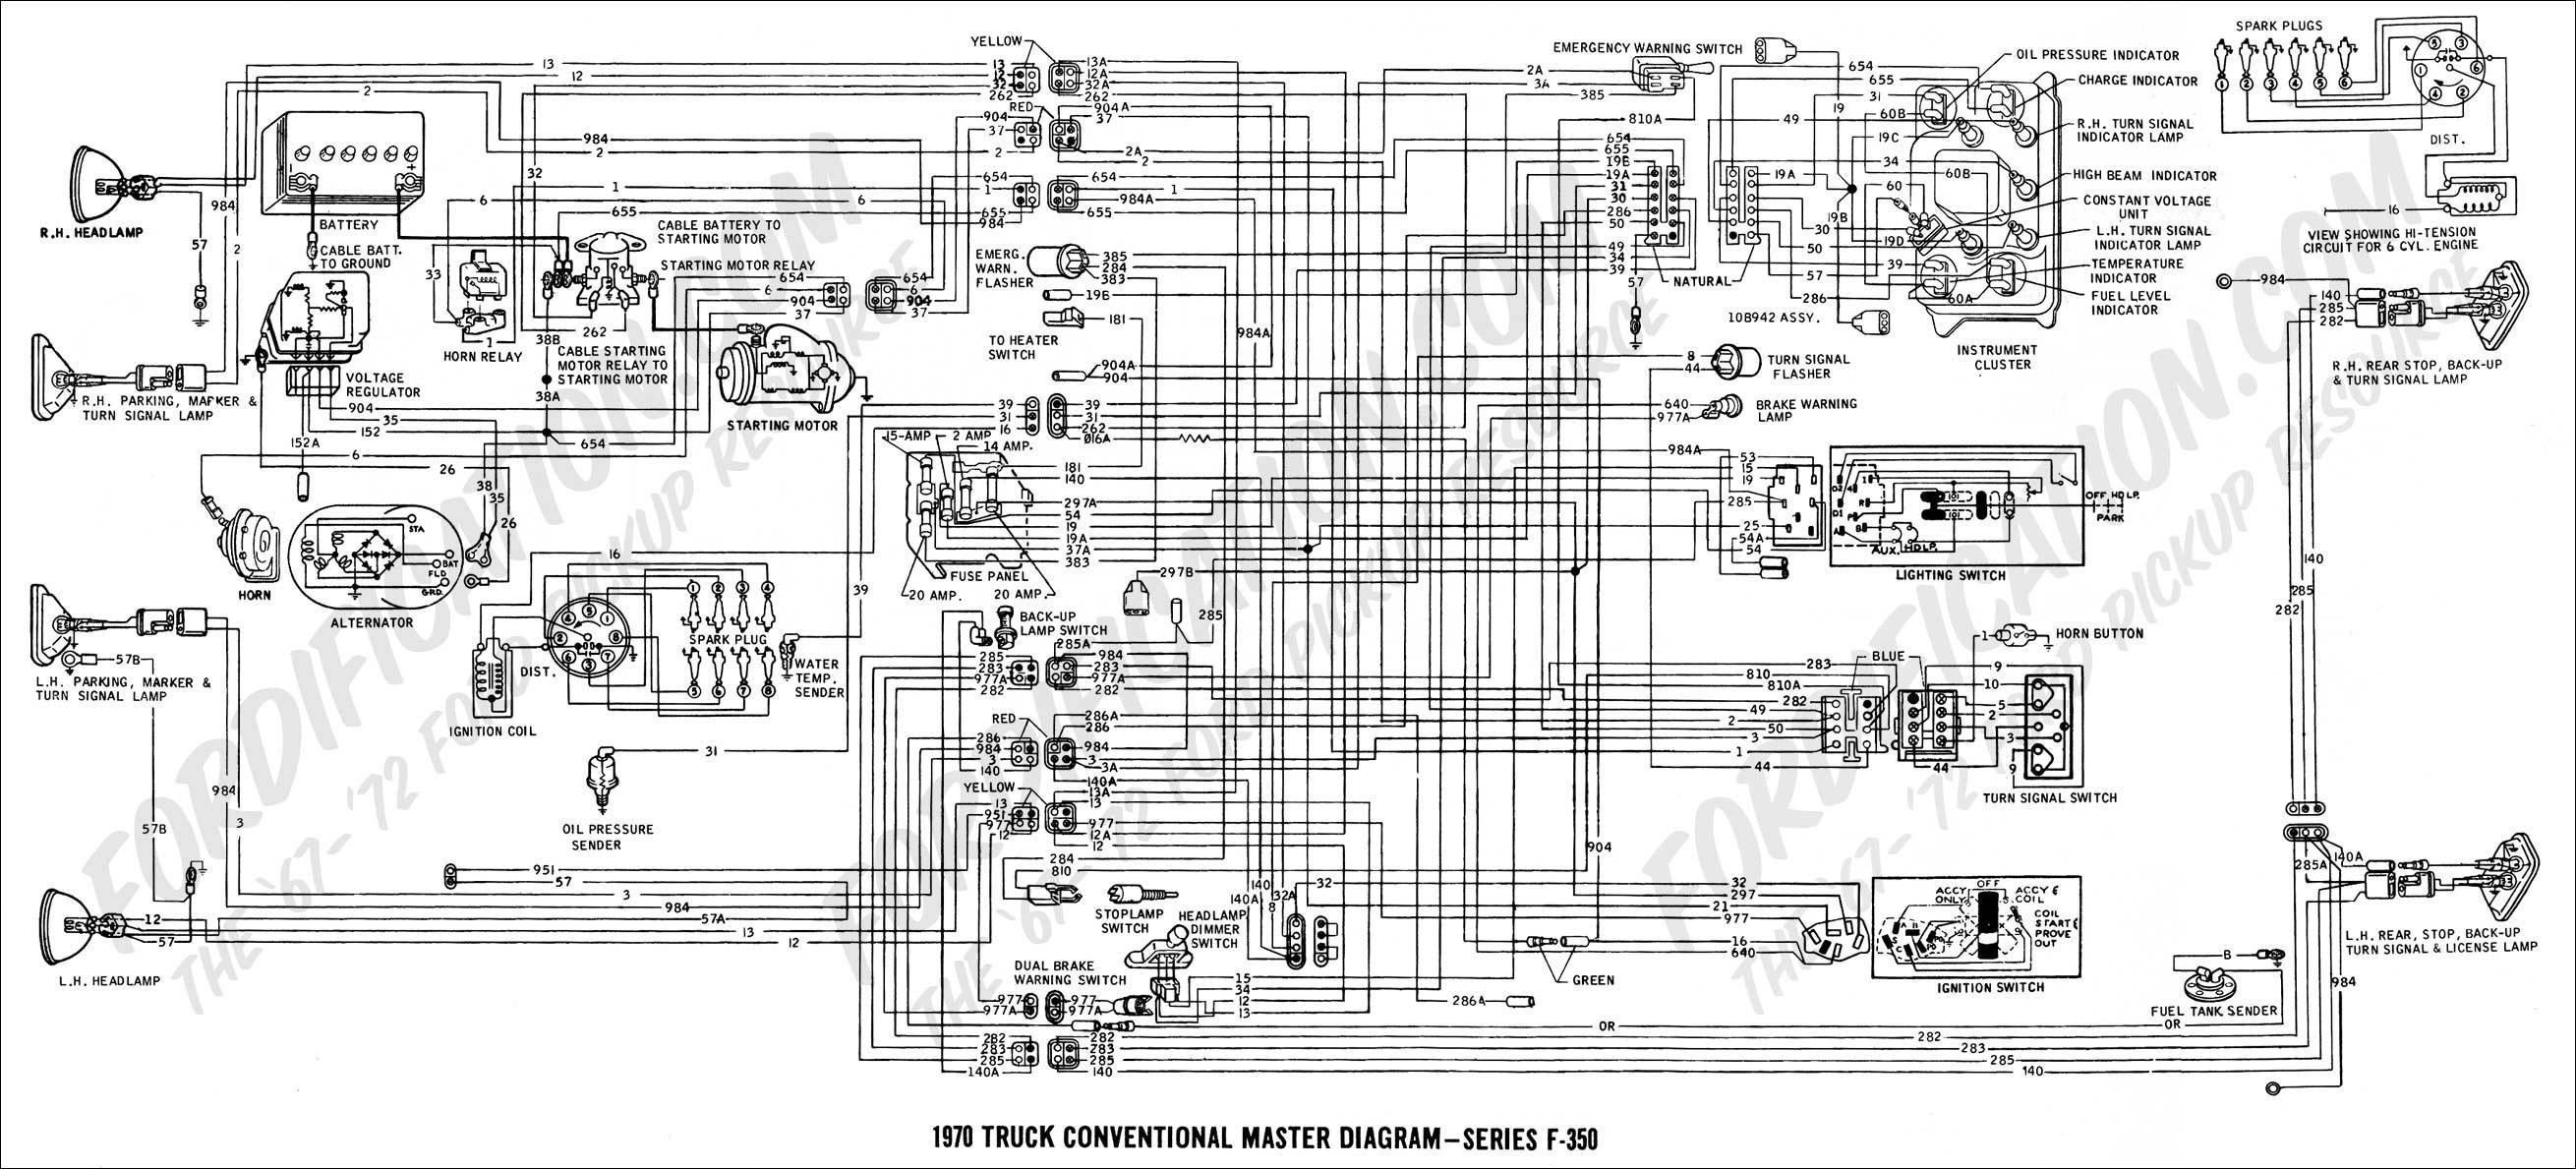 99 ford Escort Engine Diagram ford Wiring Diagrams Free Wiring Diagram Inside Of 99 ford Escort Engine Diagram